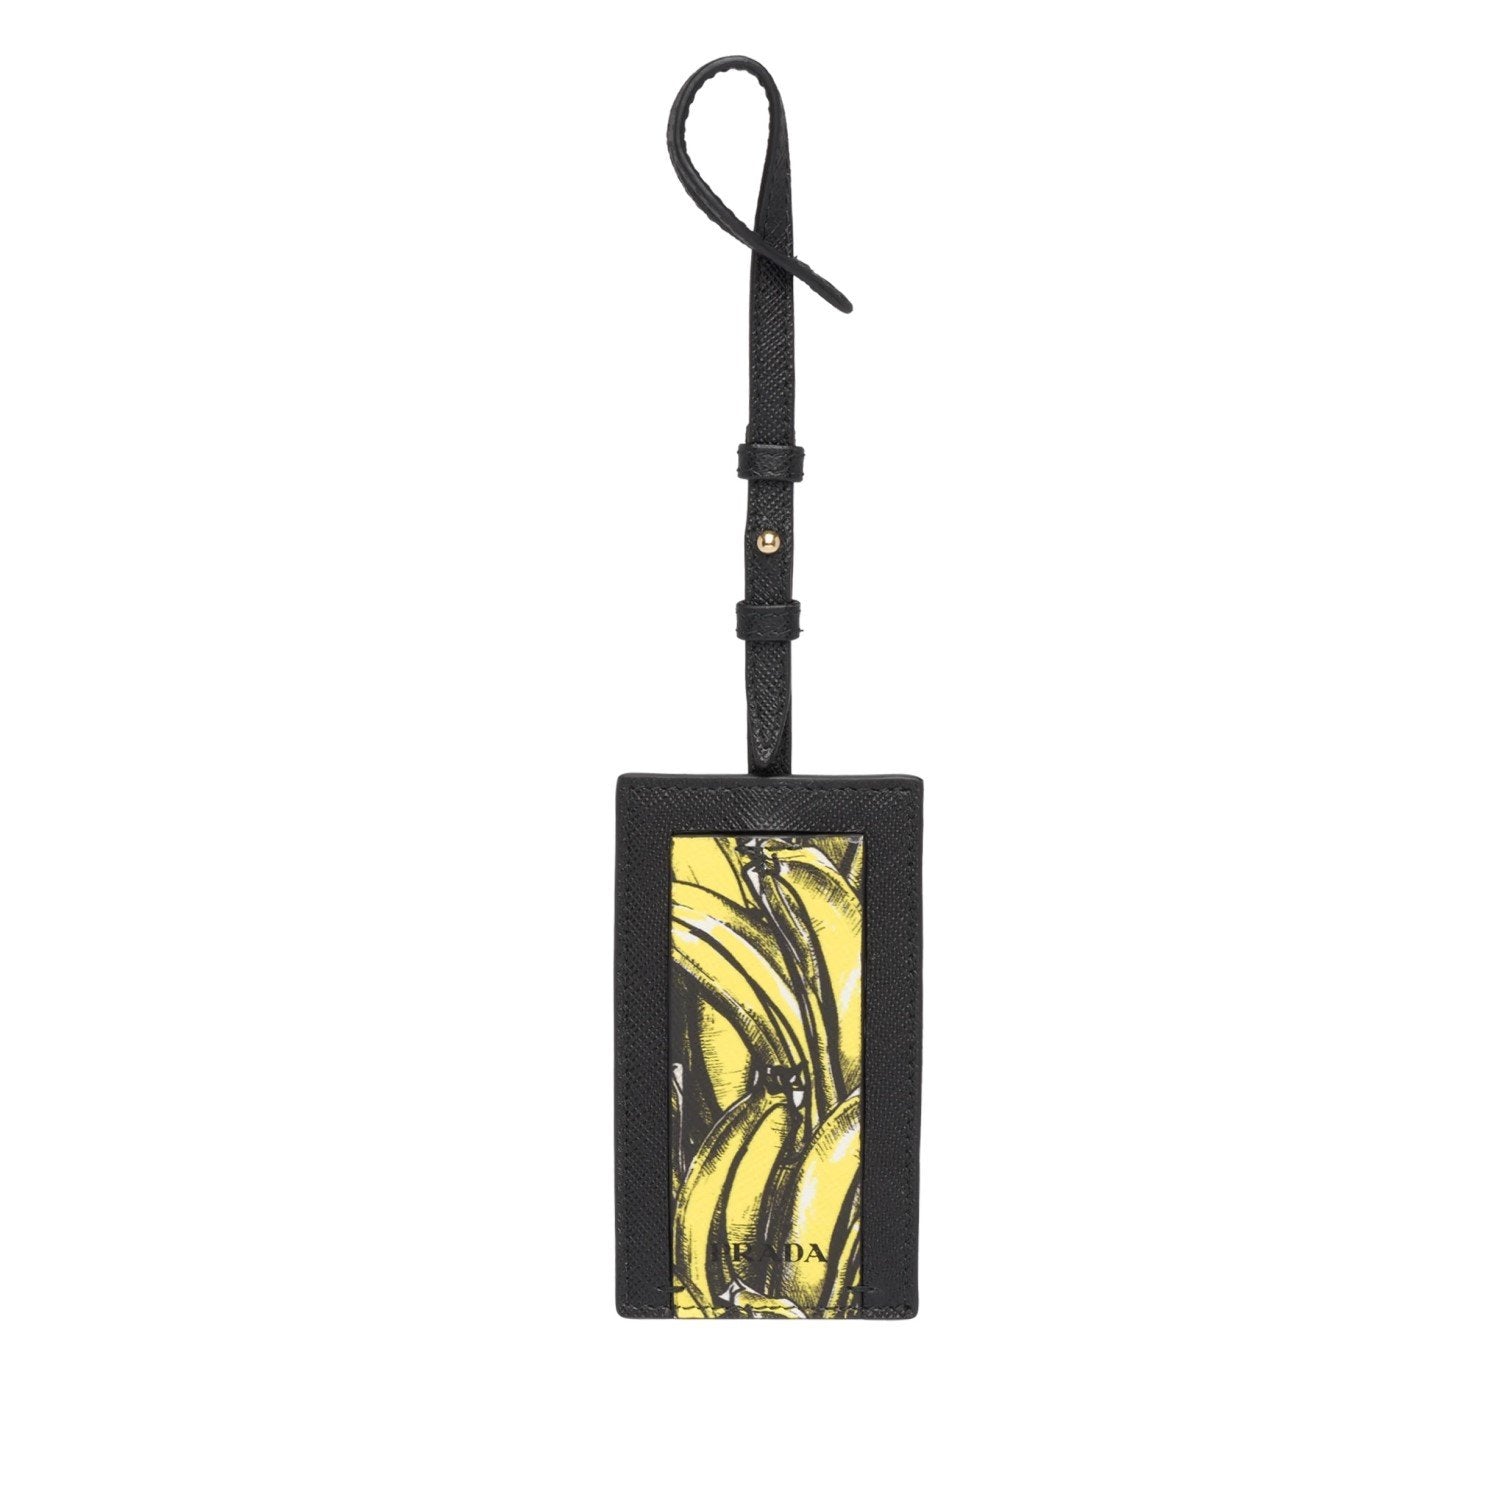 Prada Banana Saffiano Leather Name Tag Keychain Iconic Prada